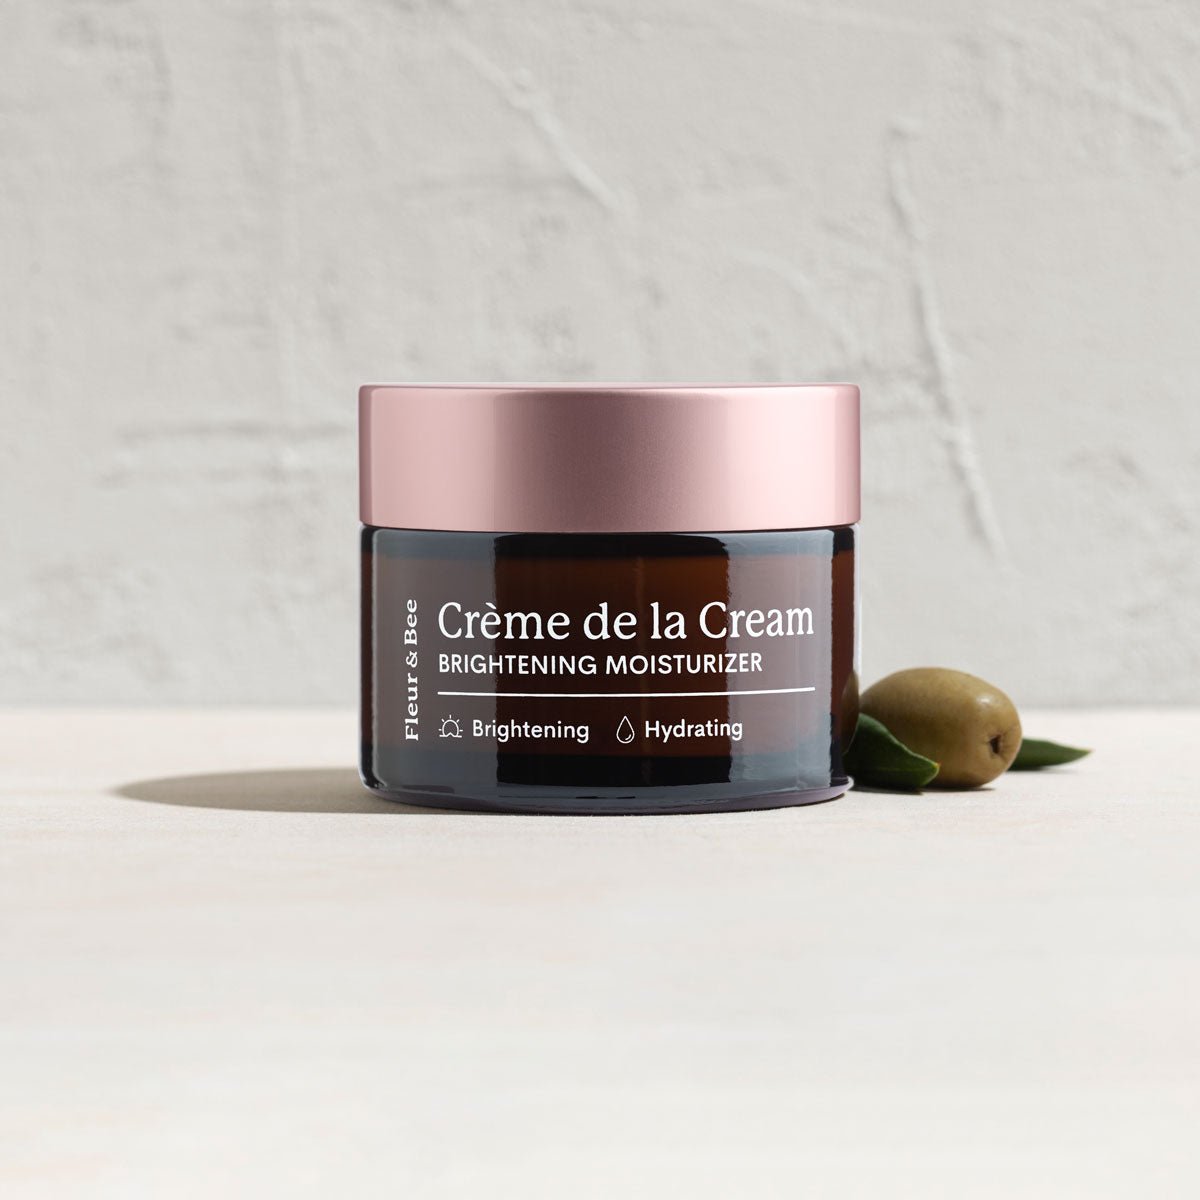 Crème de la Cream, a natural face cream by Fleur & Bee